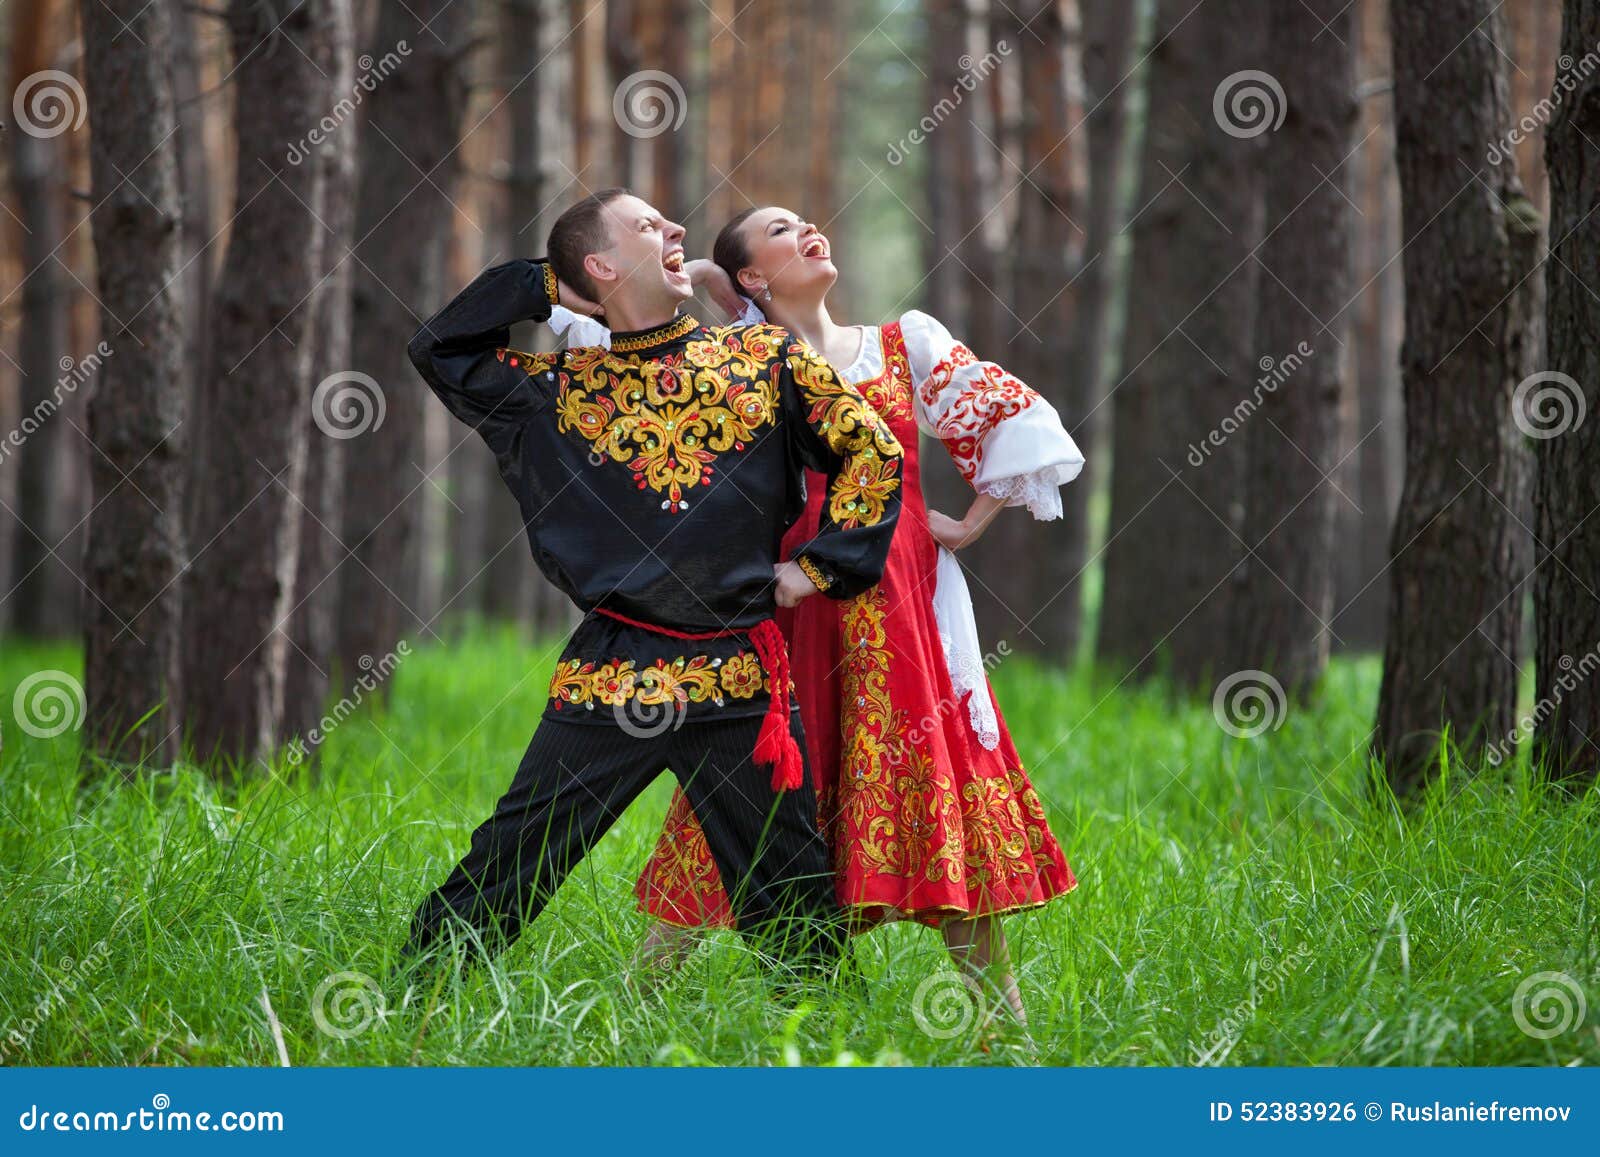 https://thumbs.dreamstime.com/z/paar-die-russische-traditionele-kleding-op-aard-dansen-52383926.jpg